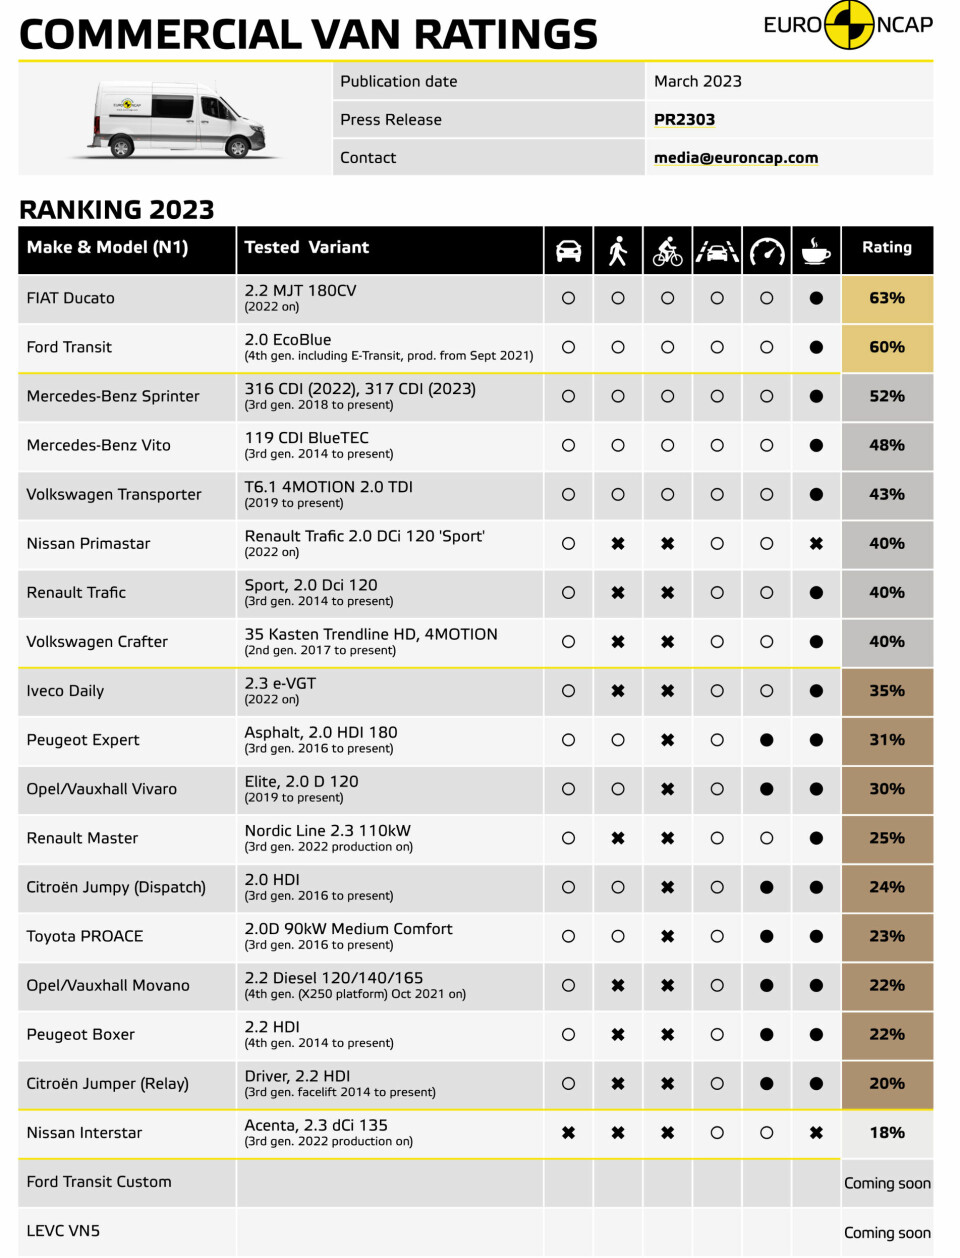 Euro NCAP 2023 Commercial Van Ratings - Ranking